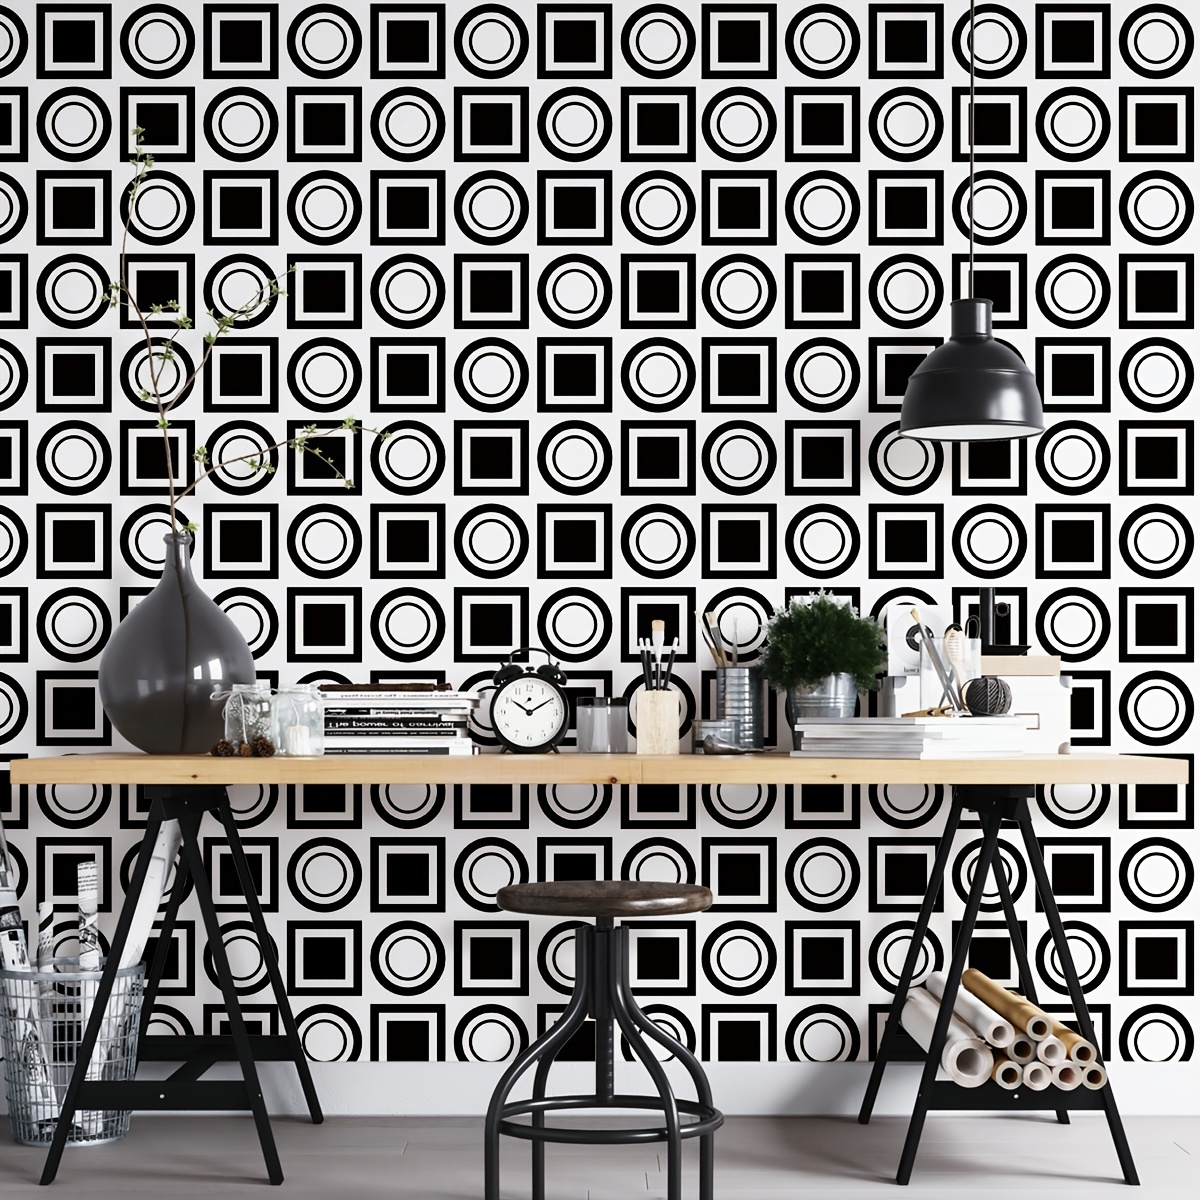 Dodo wall hanging - Black Dog Decorative Tiles